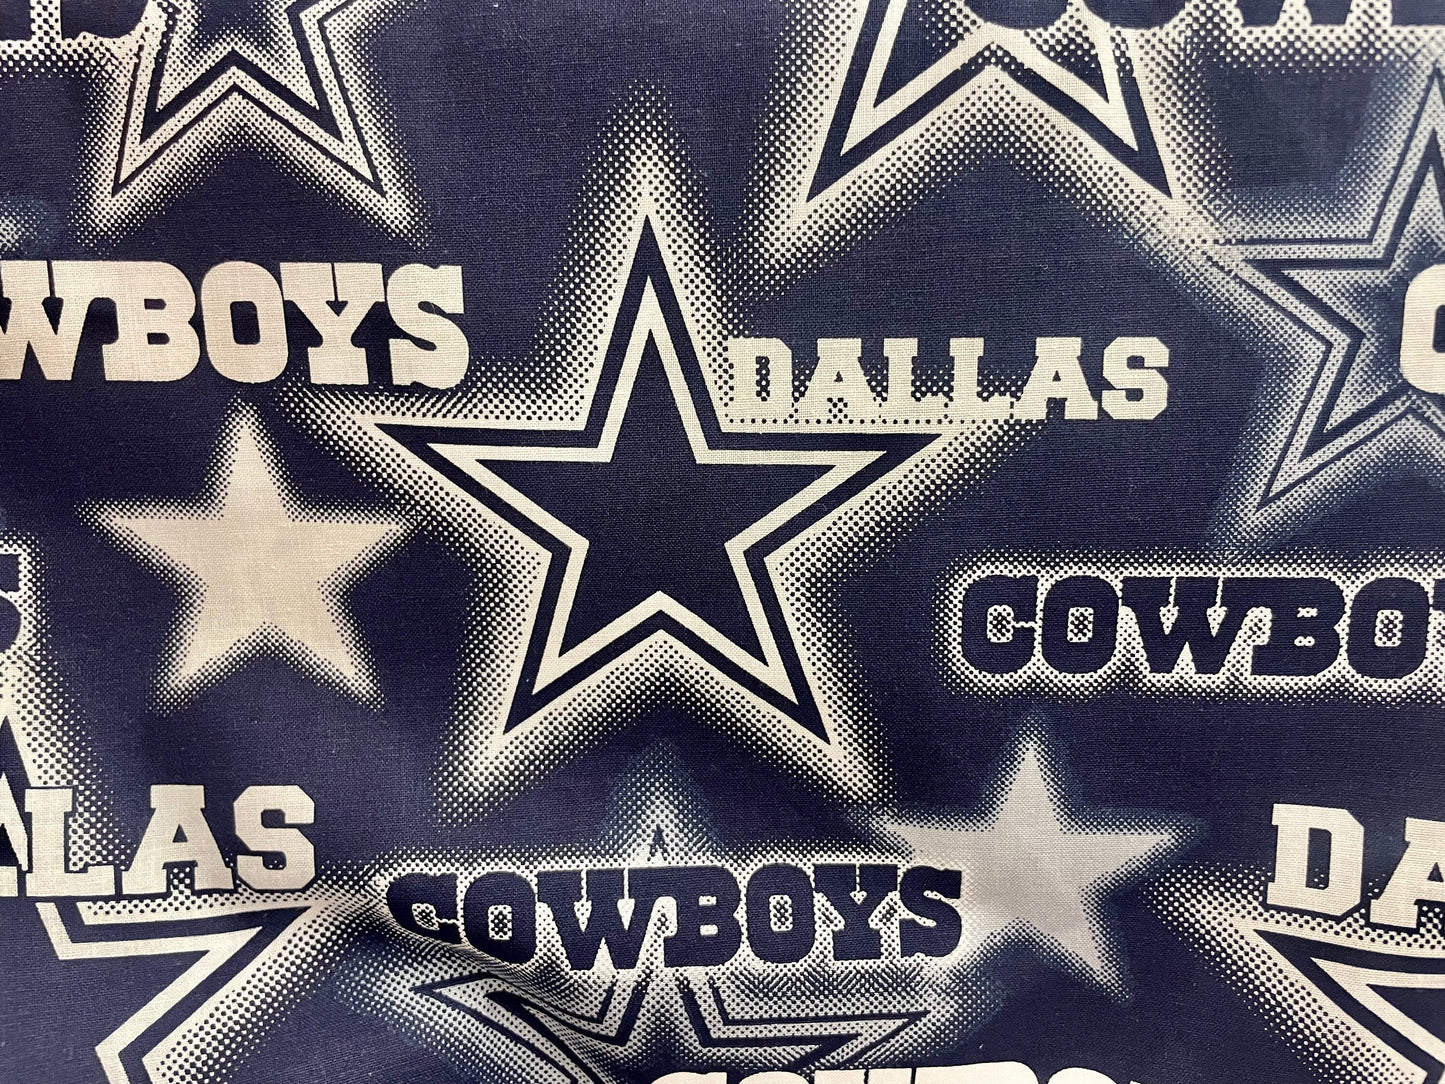 Best Dallas Cowboy Reversible blanket ever!